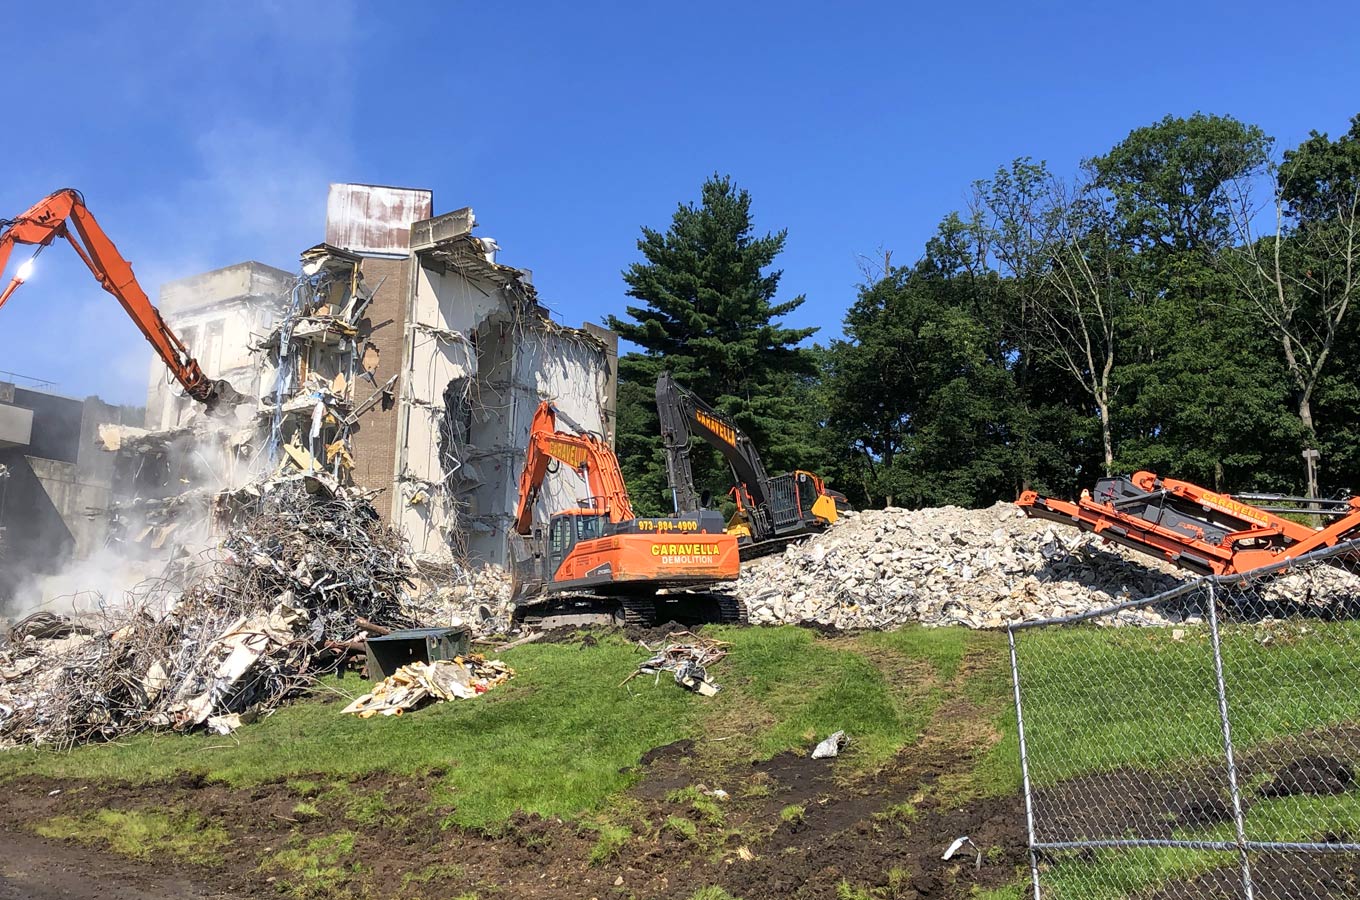 Demolition Services in Harrison, NJ 07029 | Caravella Demolition